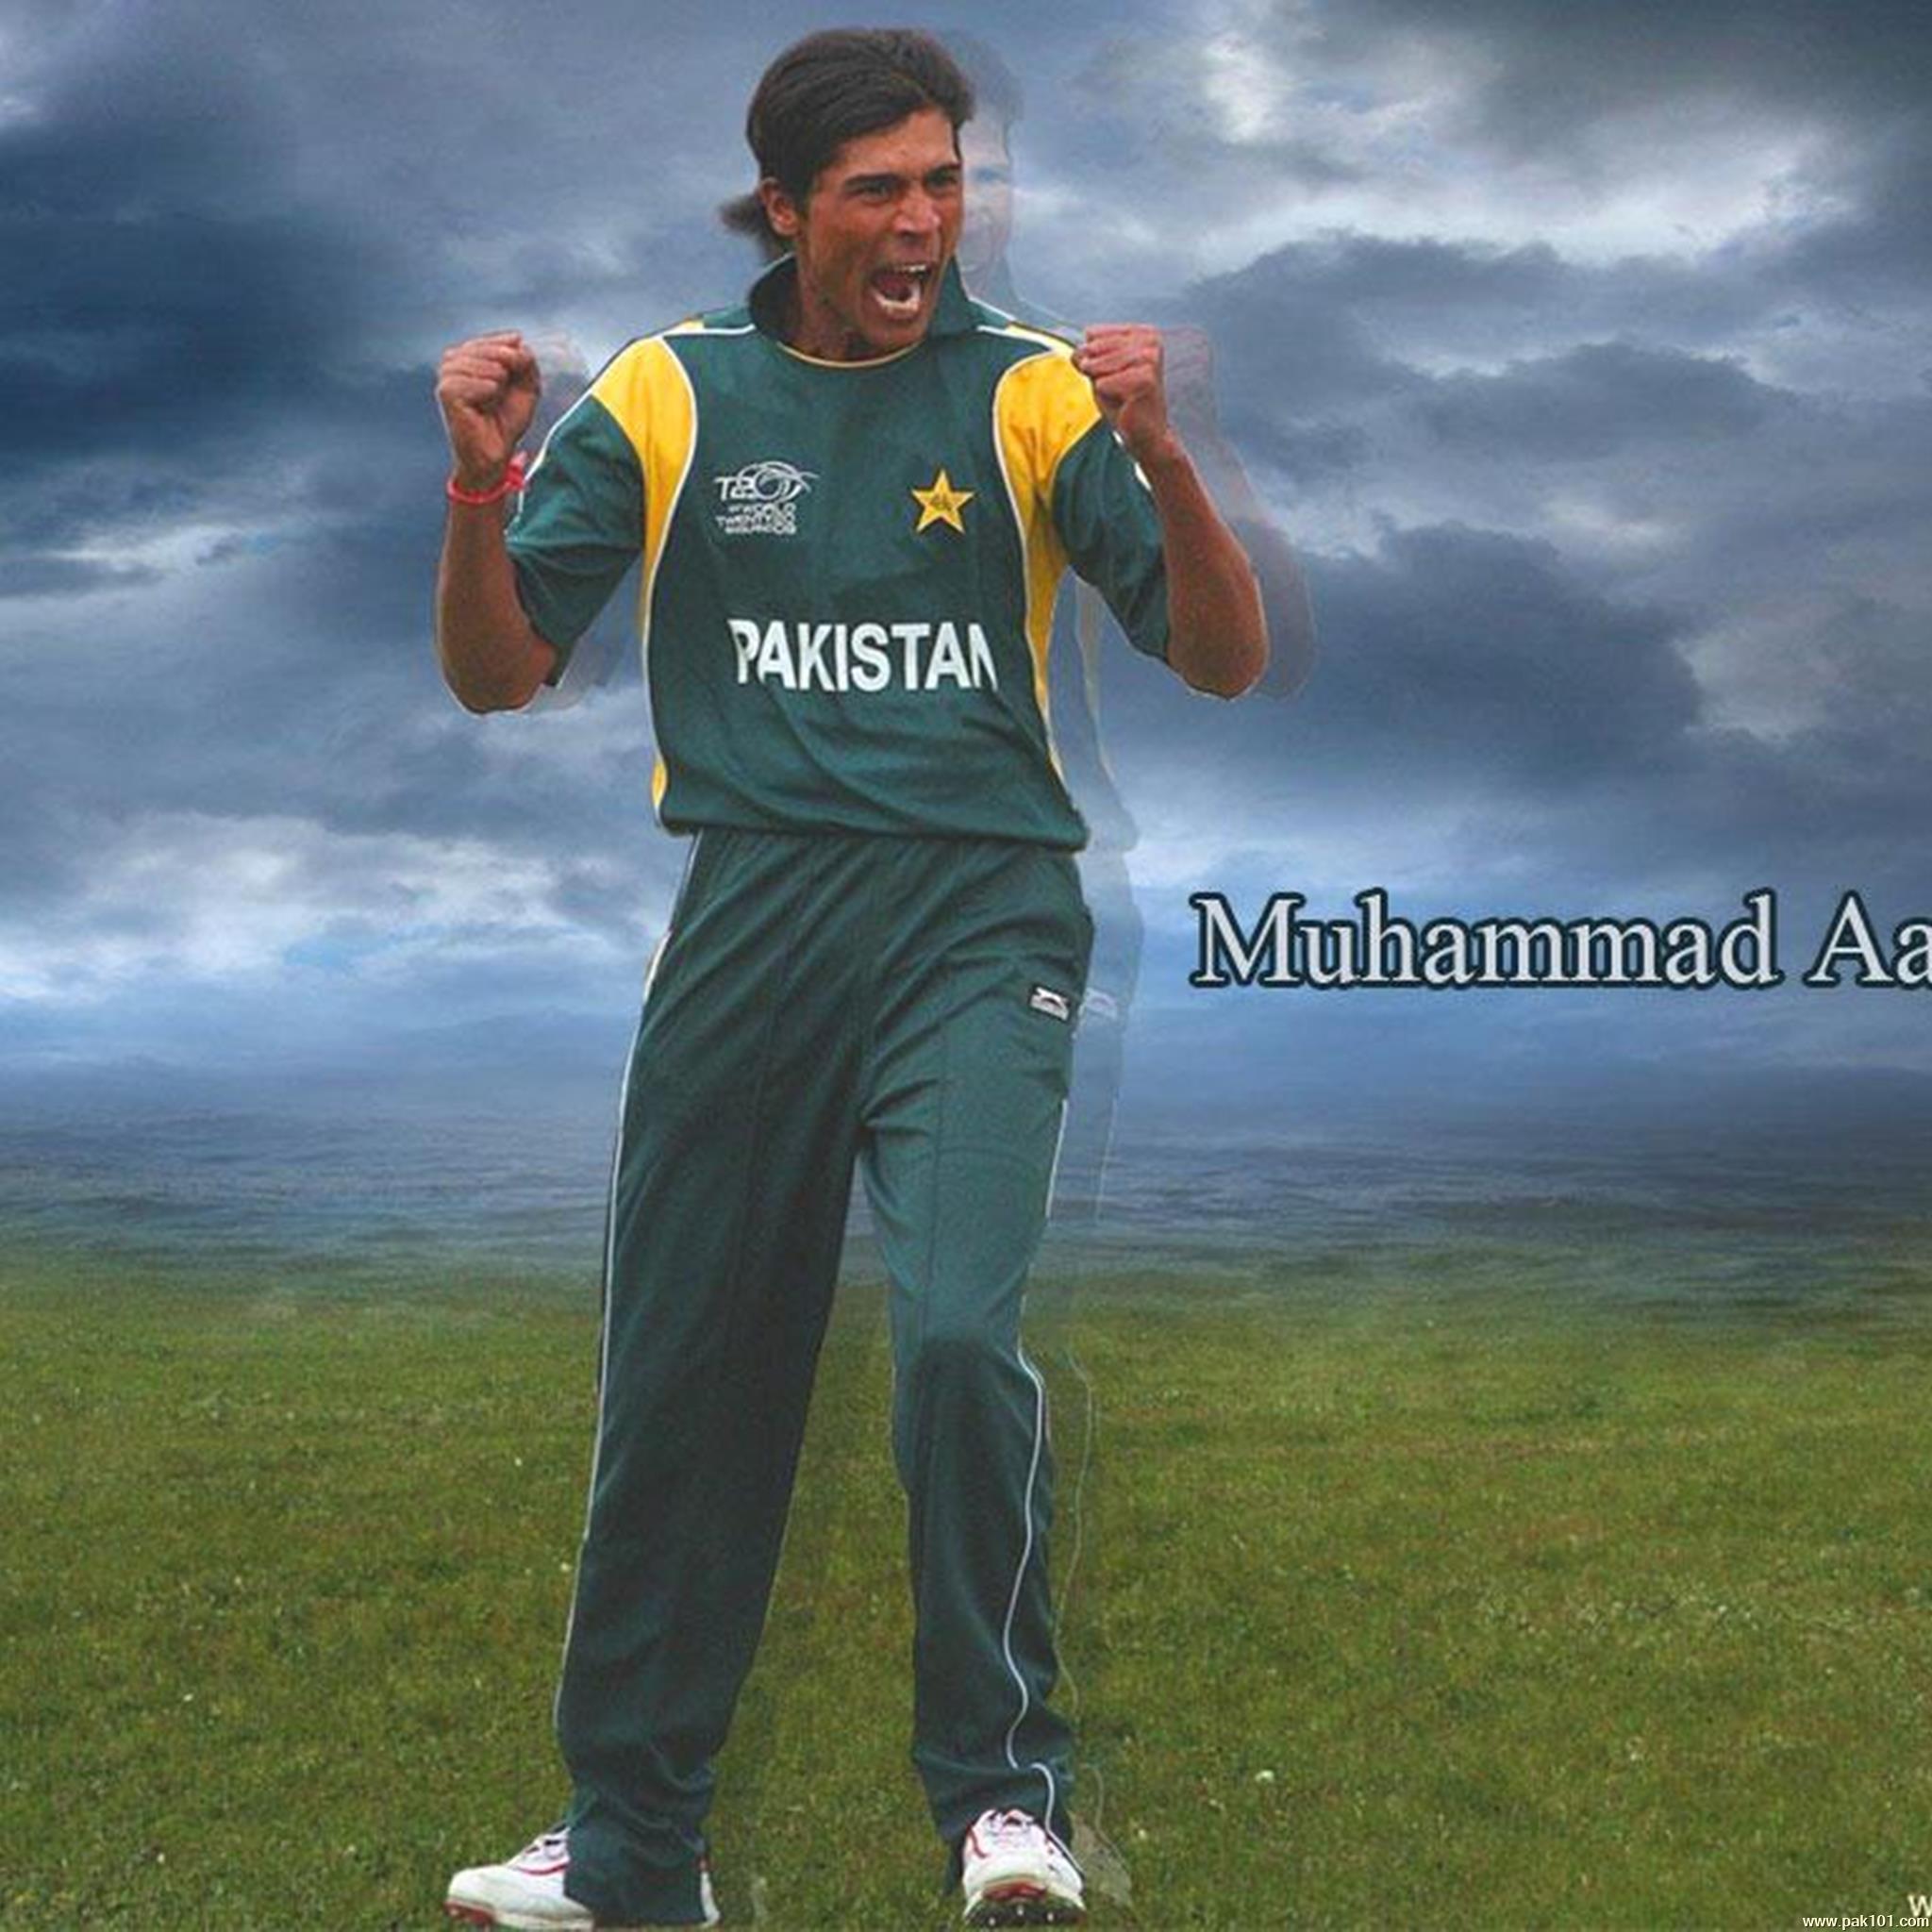 Wallpaper > Cricketers > Mohammad Amir > Mohammad, Amir high